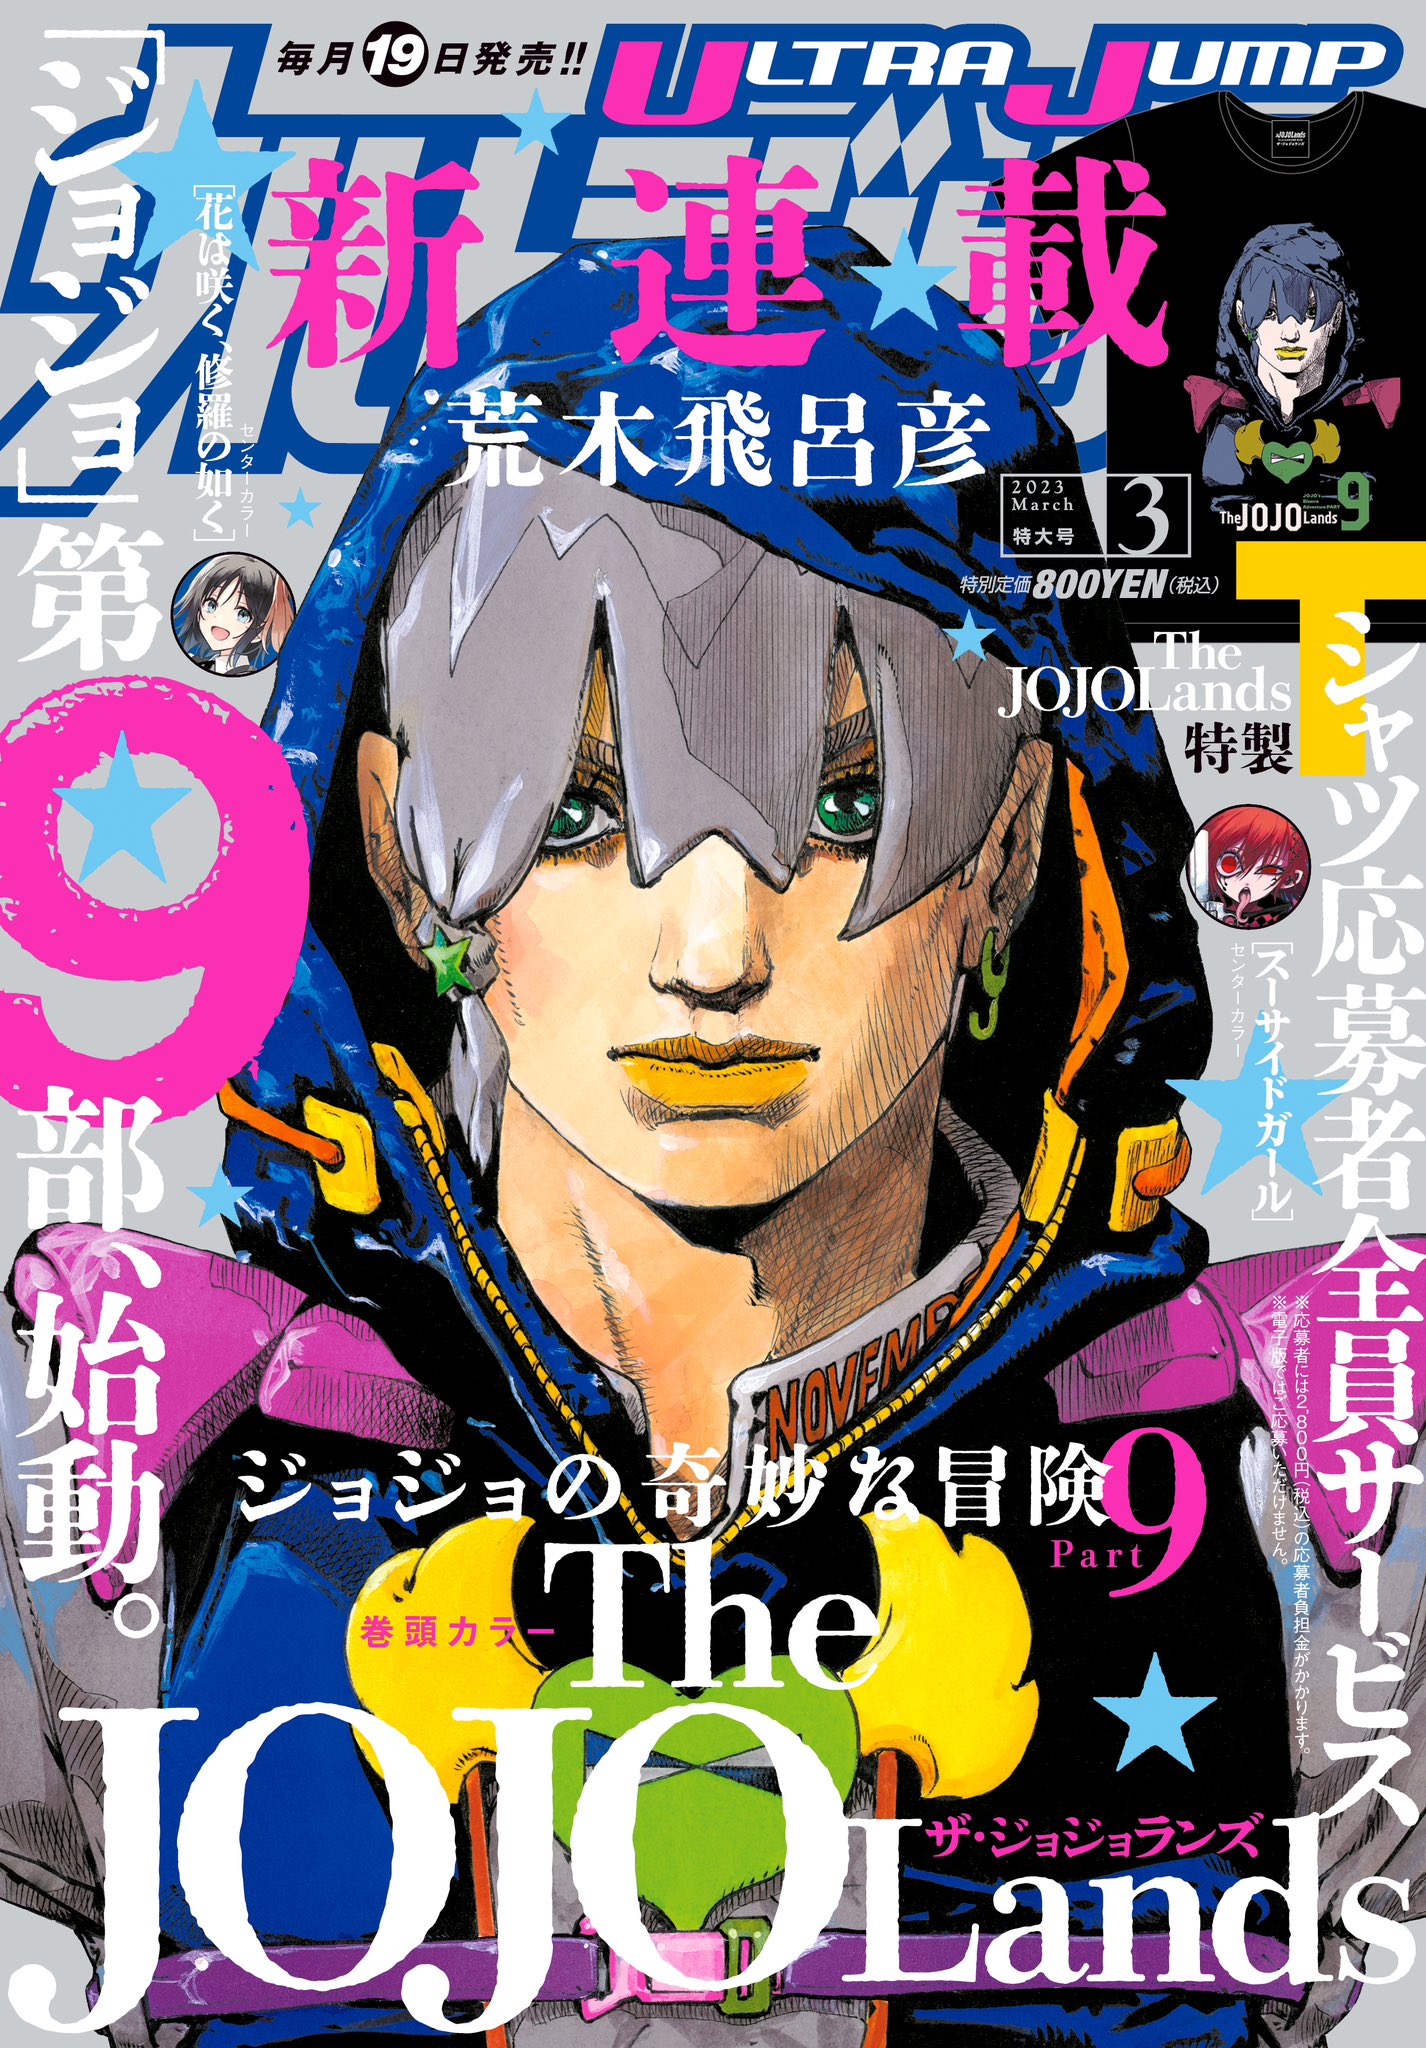 JOJOmagazine公式 (@JOJO_magazine) / Twitter